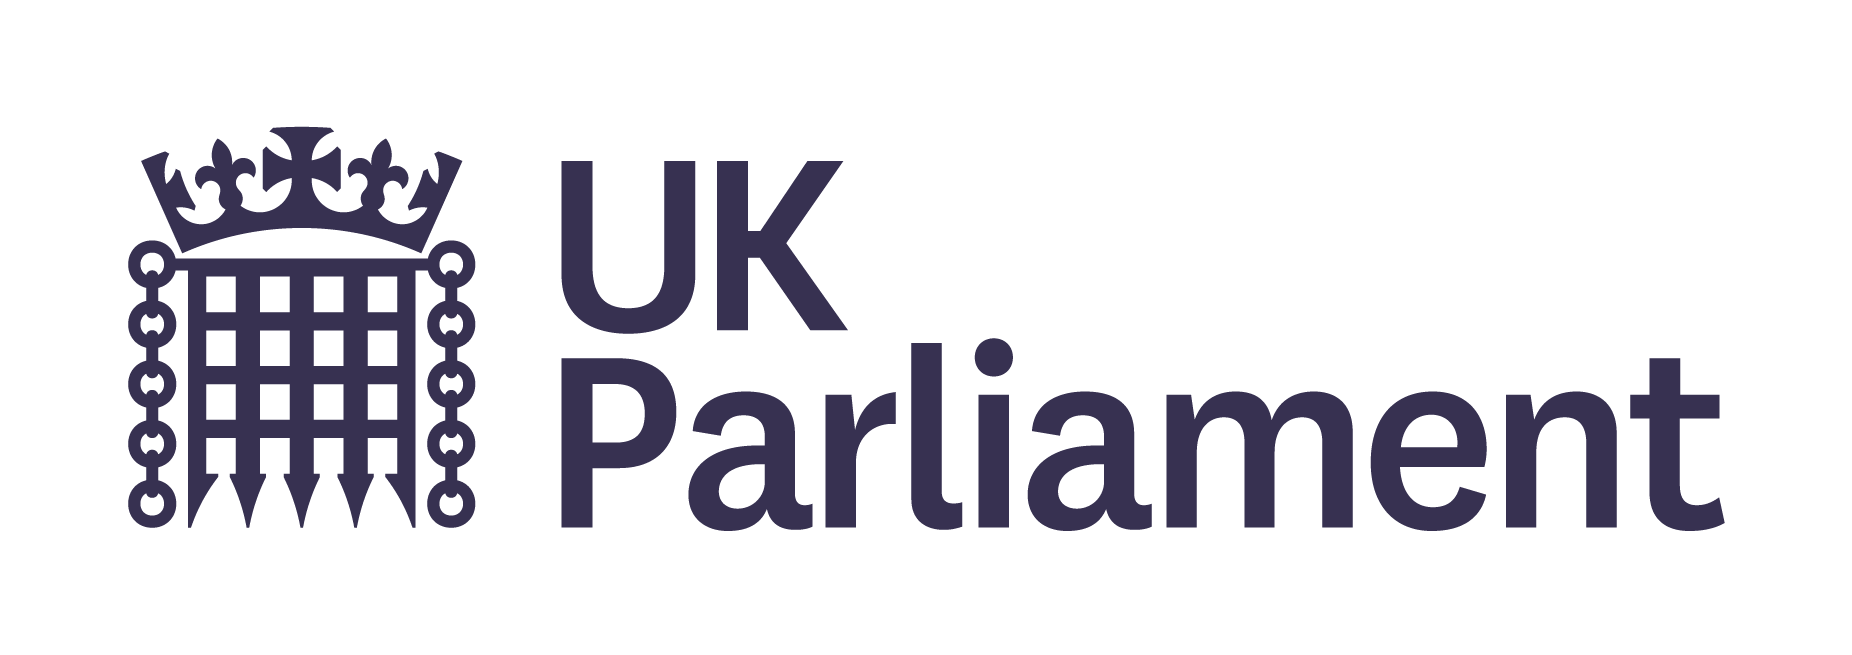 UK Parliament case study